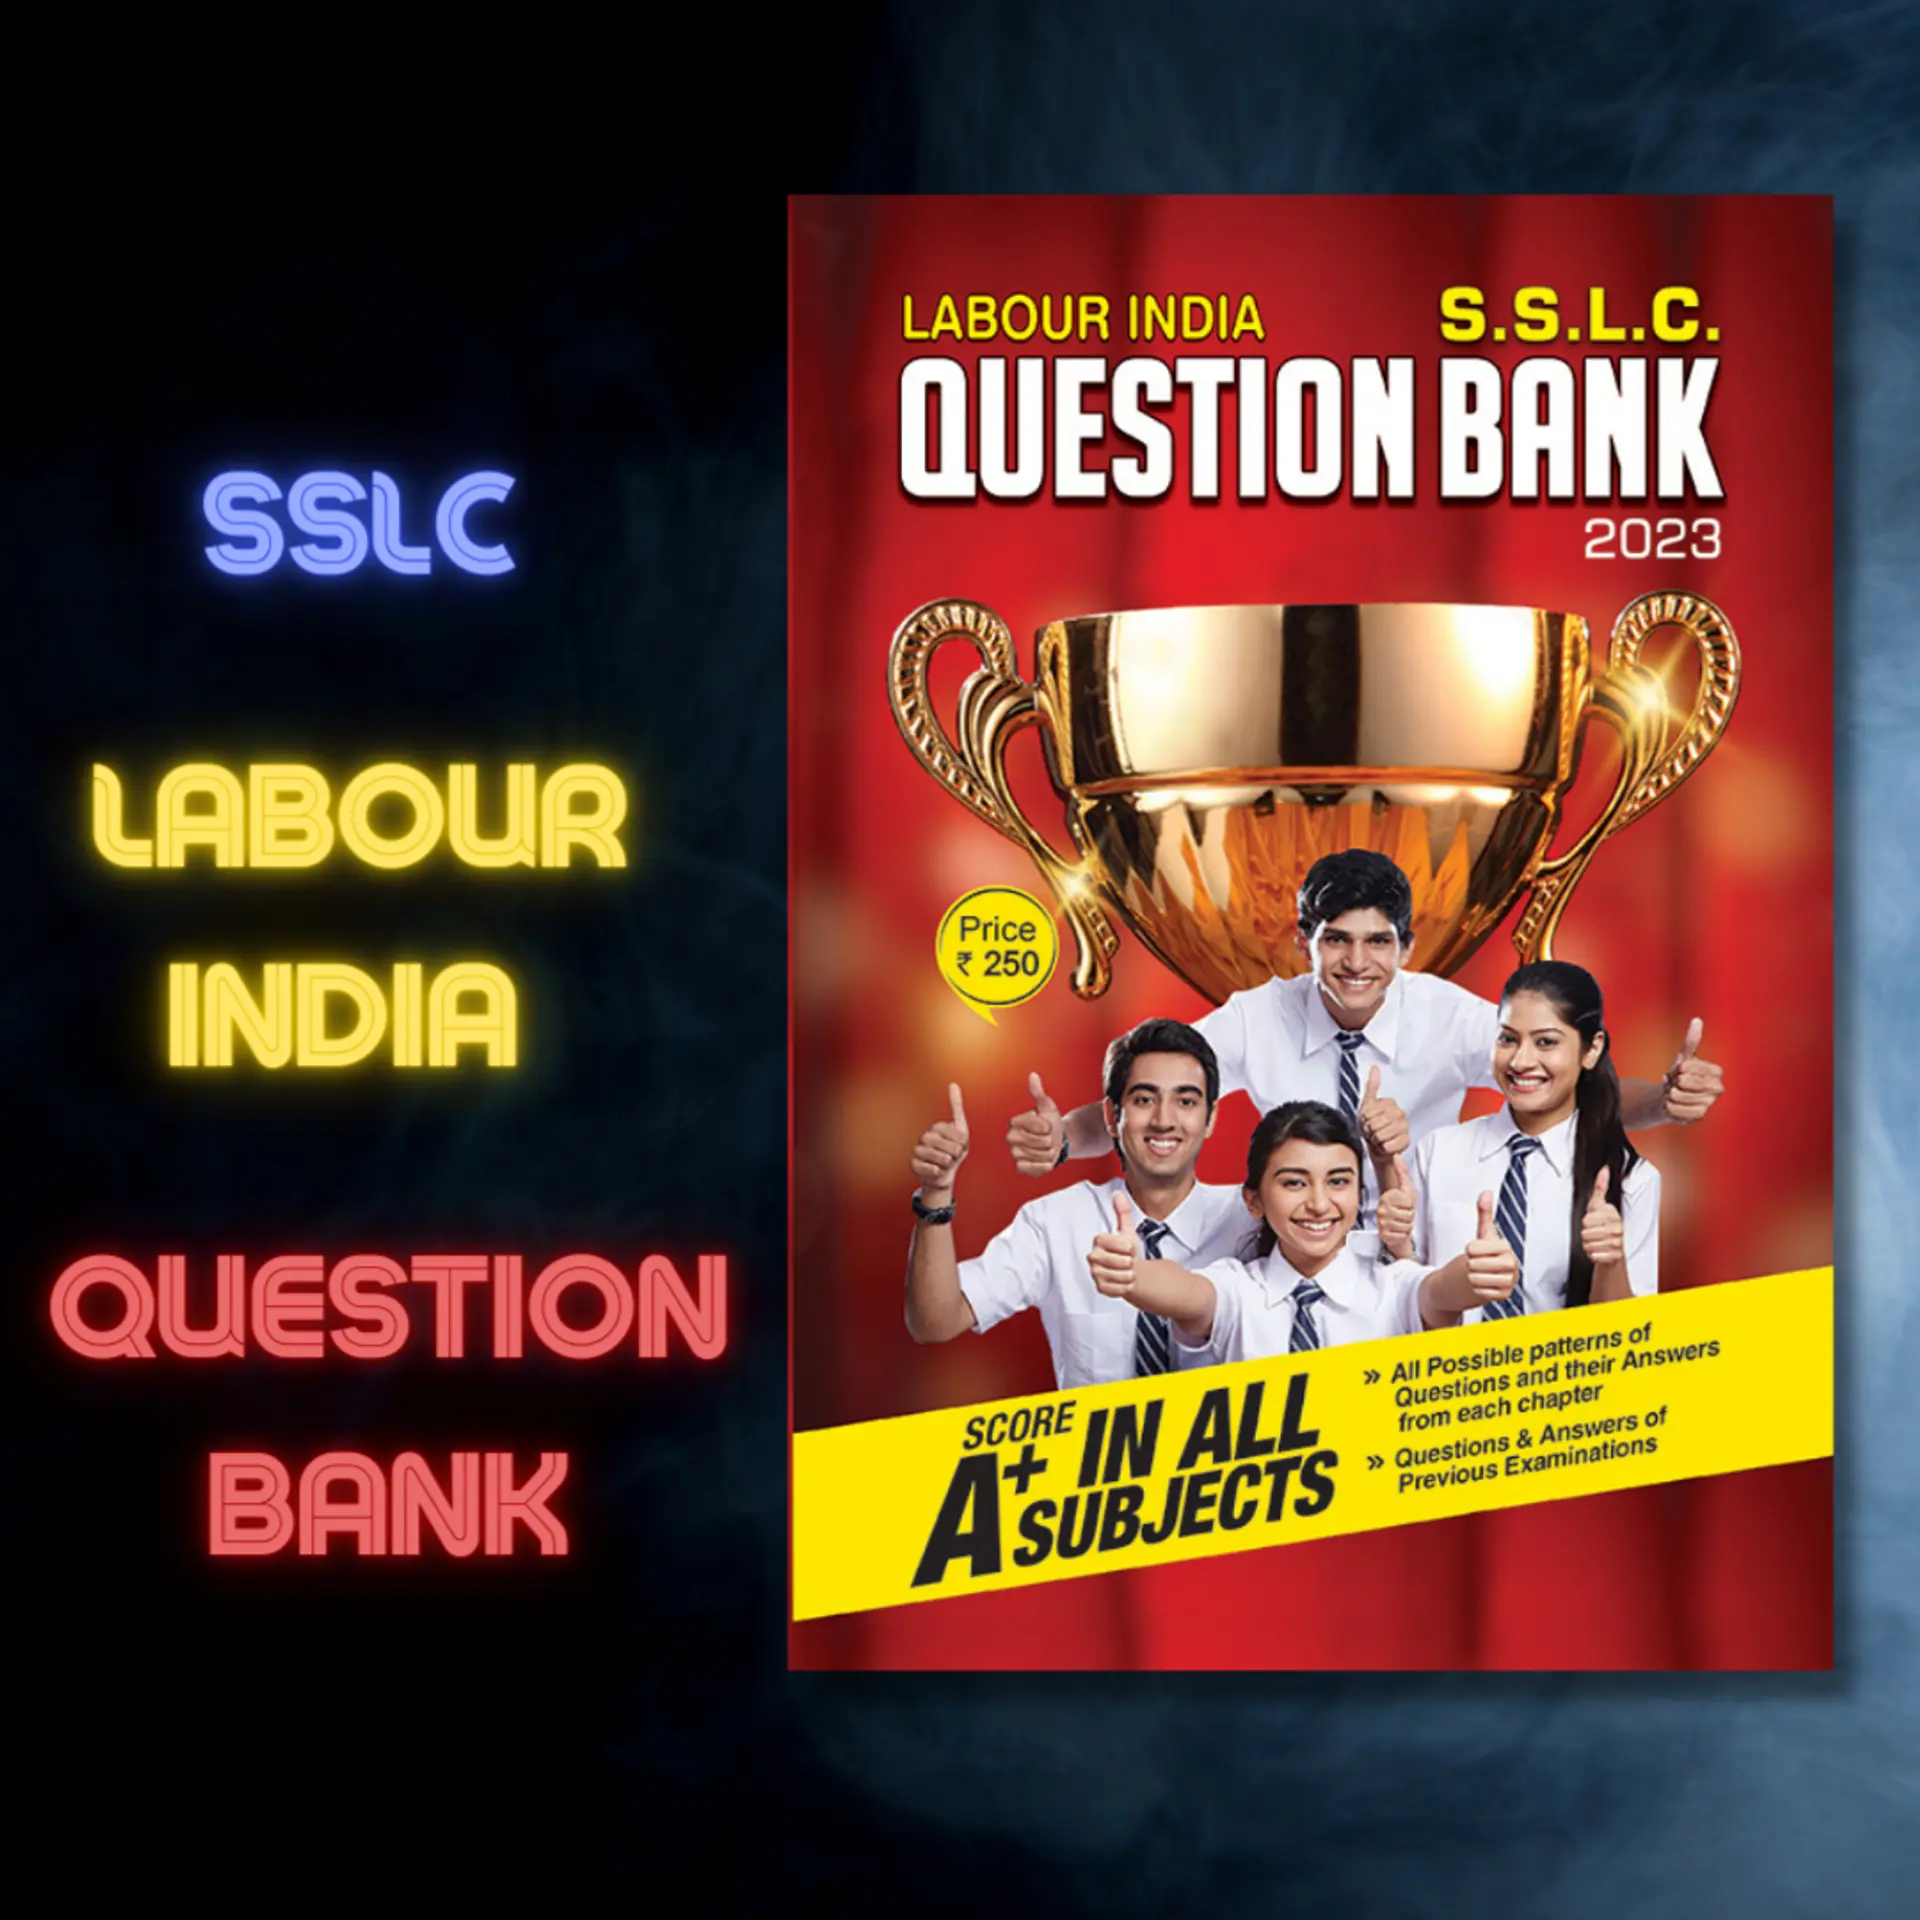 Labour India Question Bank 2023 SSLC Kerala State Syllabus | English Medium